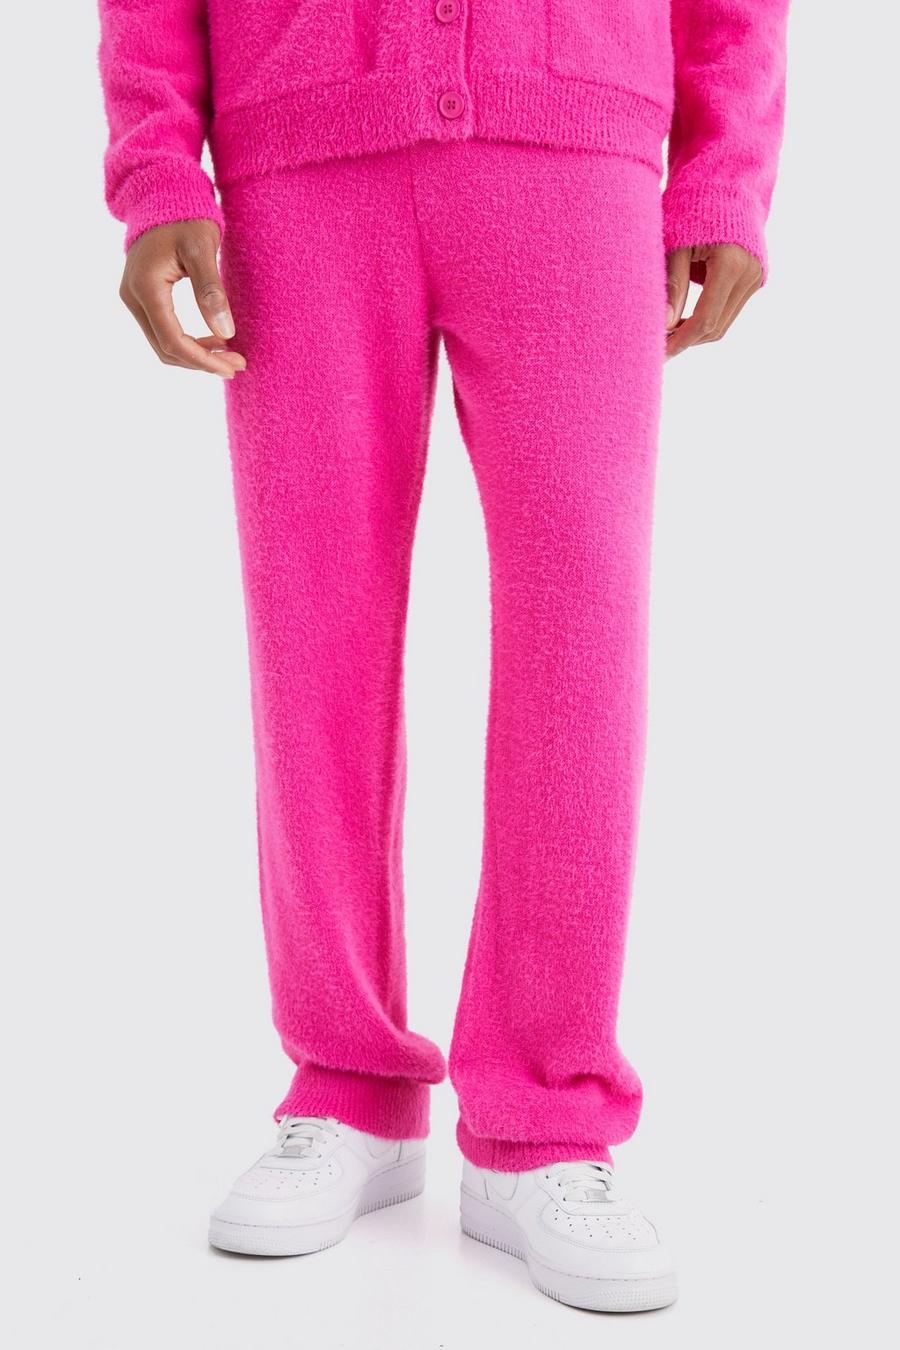 Lockere flauschige Jogginghose, Hot pink